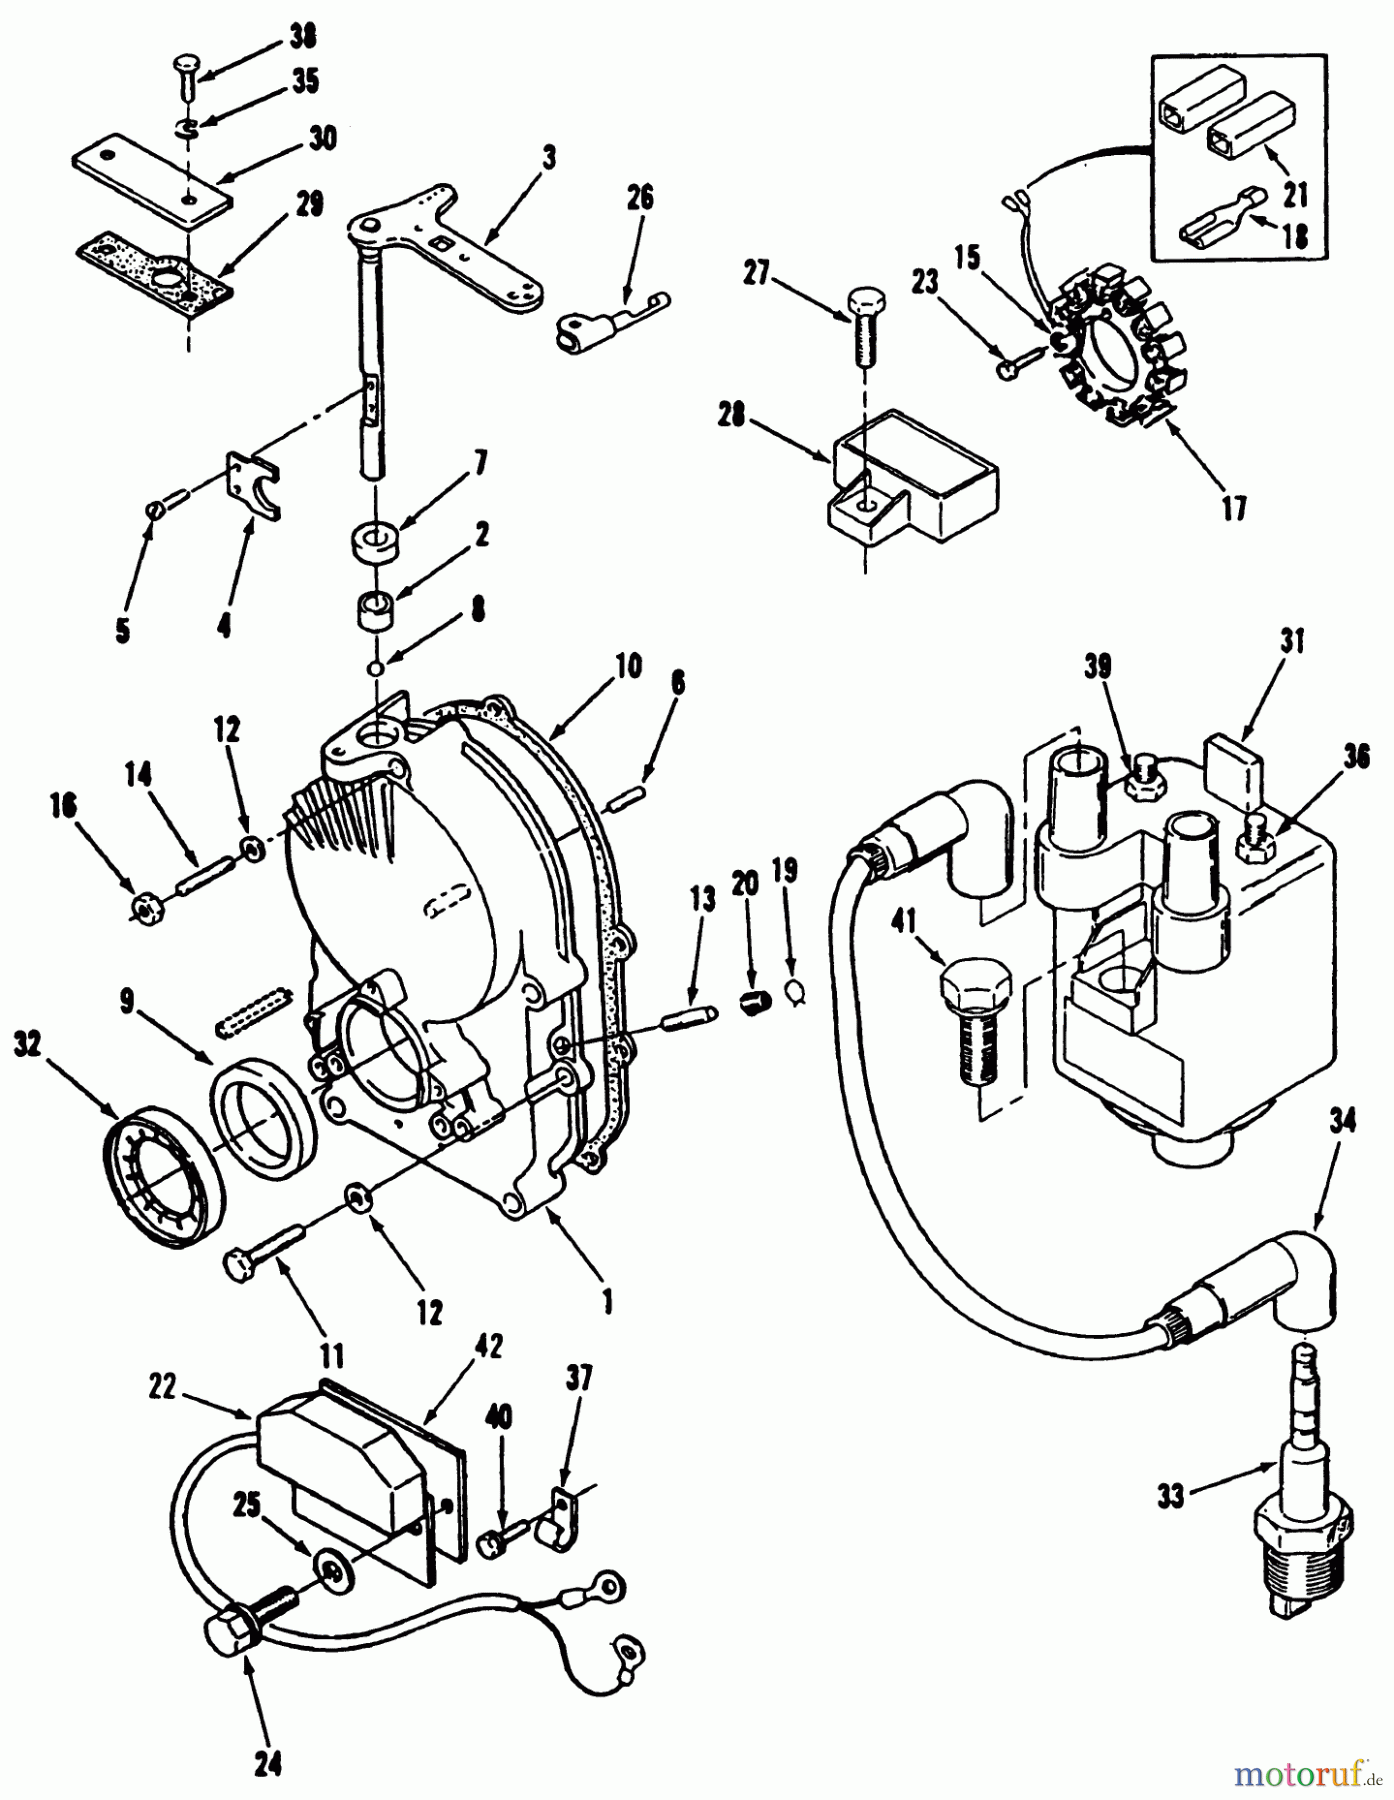  Toro Neu Mowers, Lawn & Garden Tractor Seite 1 51-16OE02 (416-H) - Toro 416-H Garden Tractor, 1992 (2000001-2999999) GEARCASE AND IGNITION CONTROLS POWER PLUS